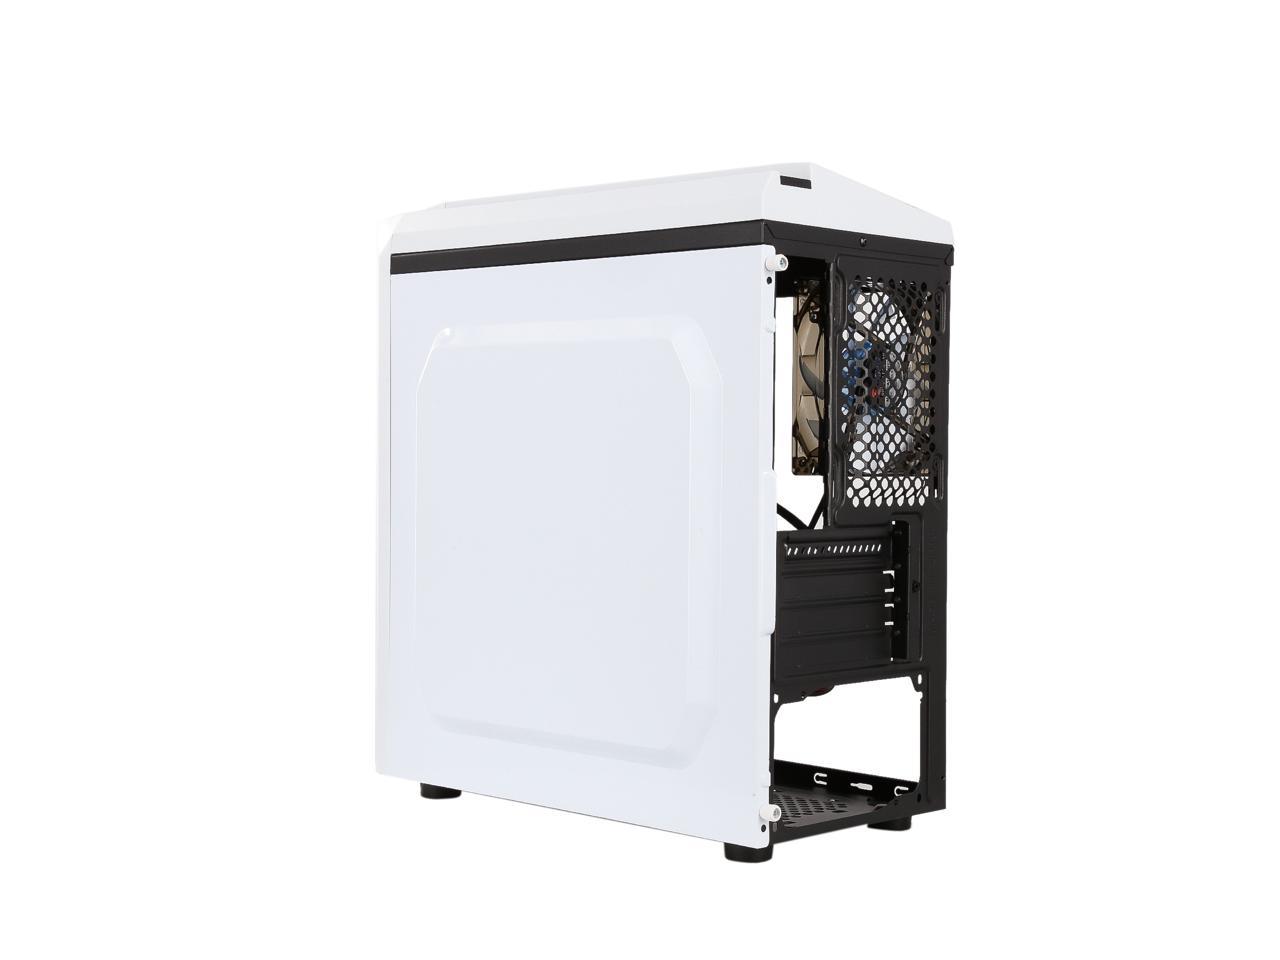 DIYPC DIY-F2-W White SPCC Micro ATX Computer Case - Newegg.com